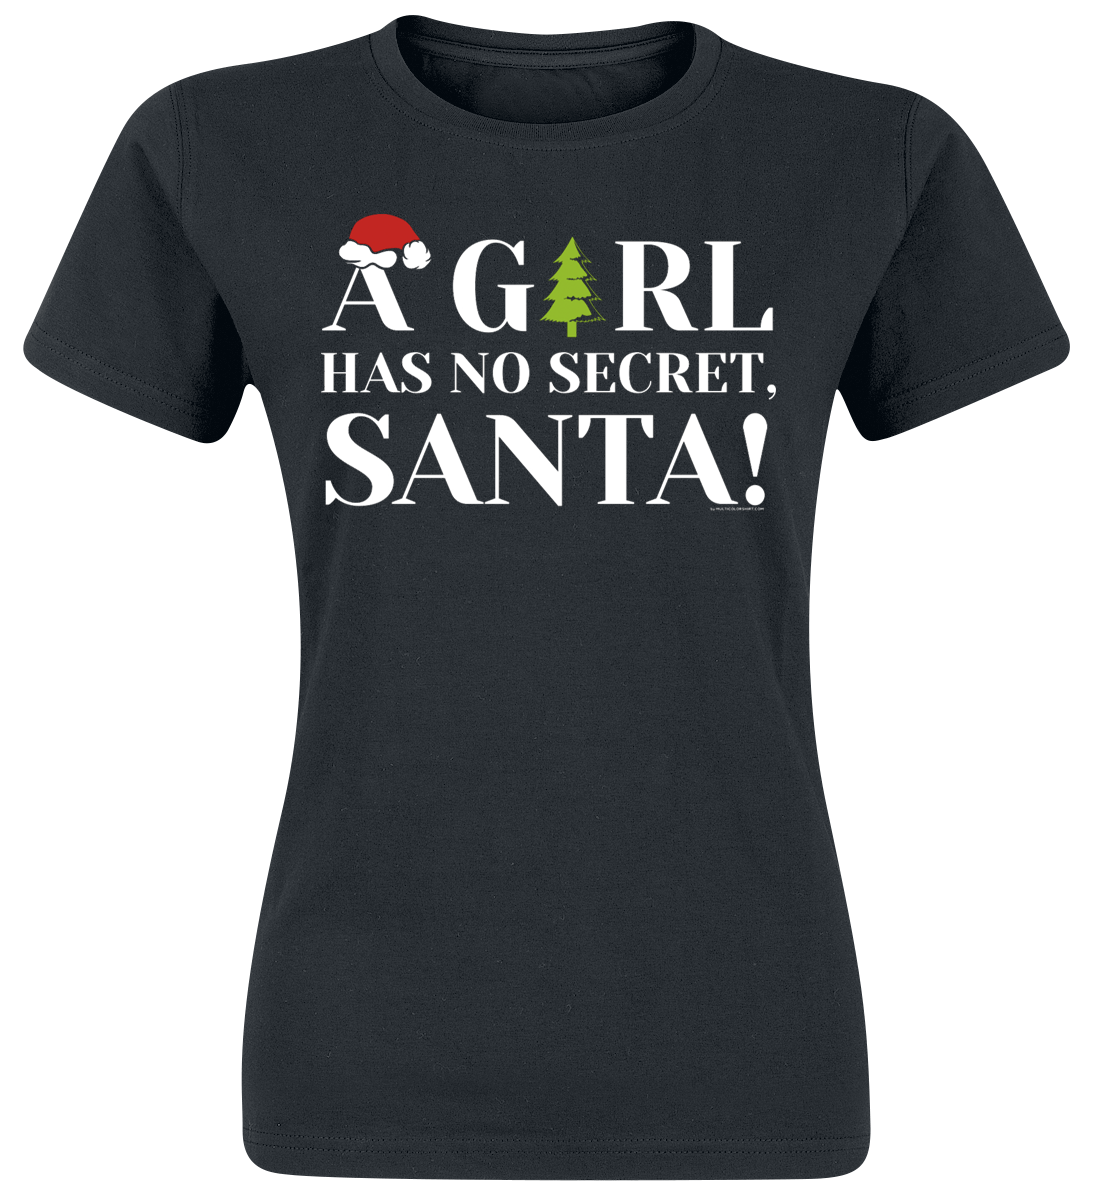 A Girl Has No Secret, Santa! -  - Girls shirt - black image